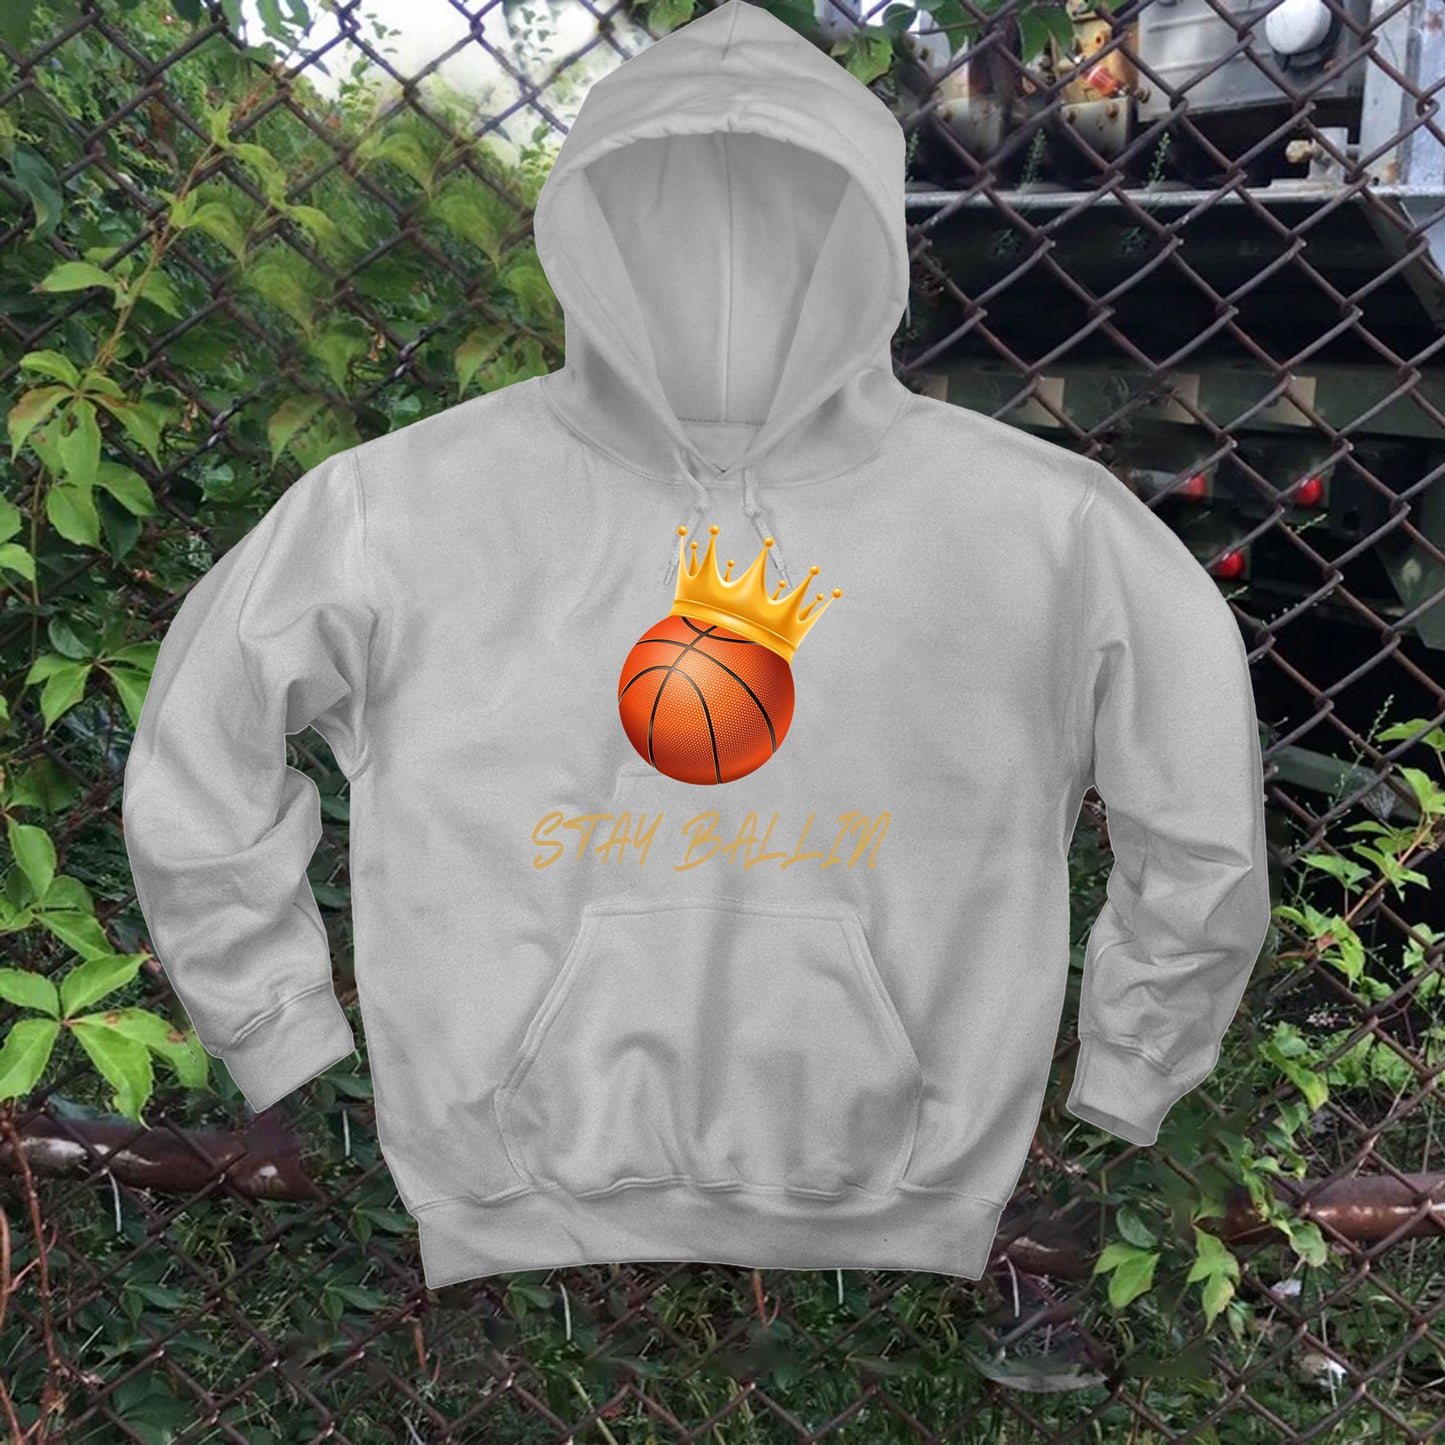 Stay Ballin King Basketball Hoodie